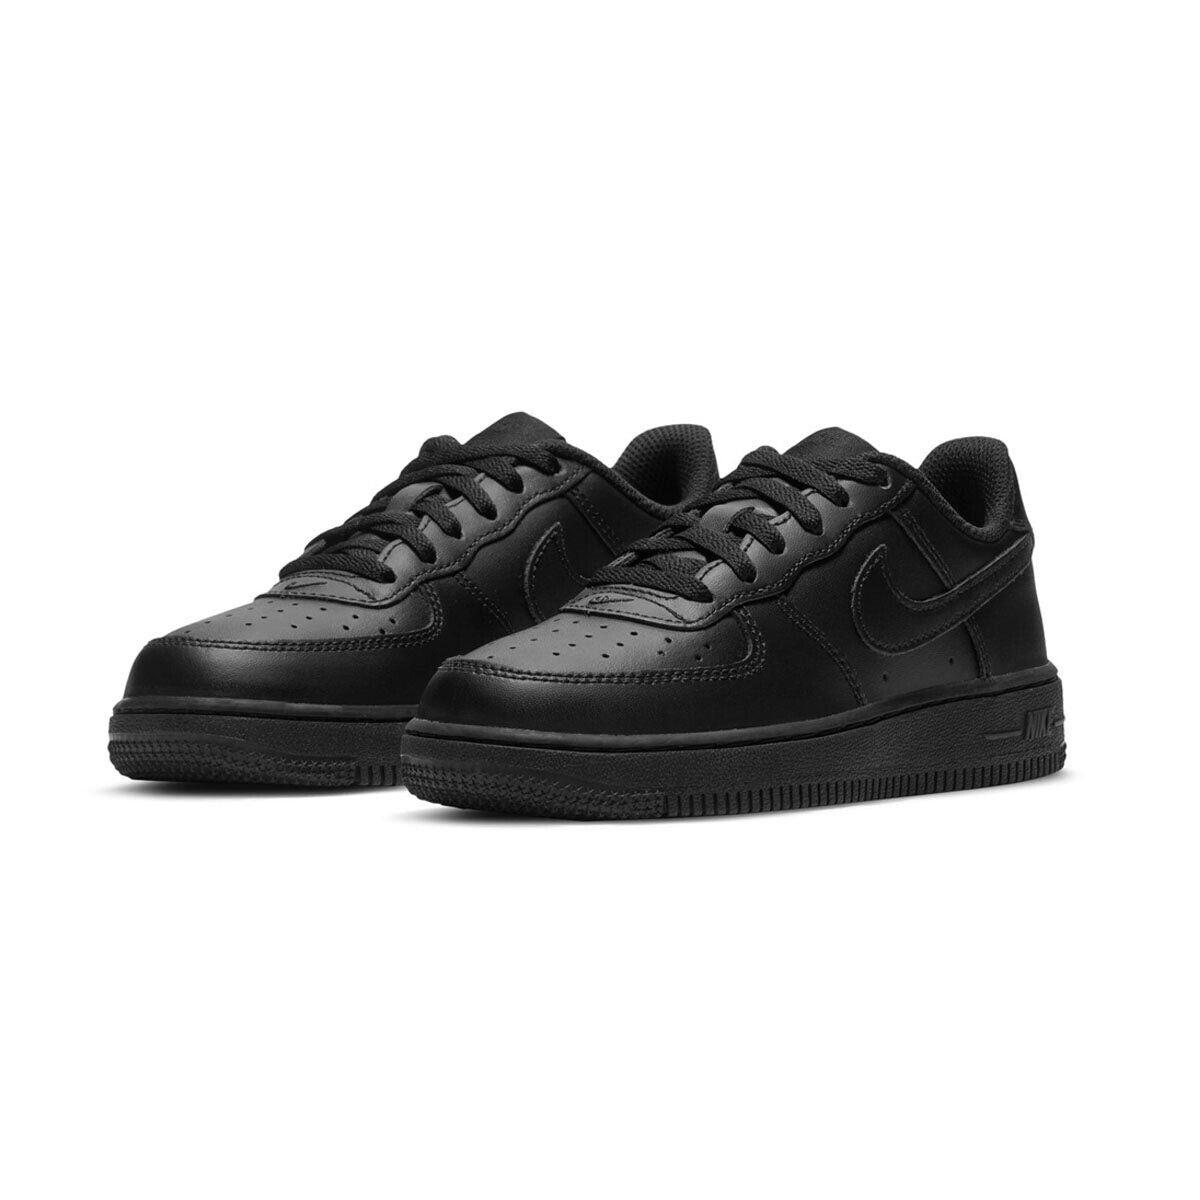 Boys Pre School Nike Force 1 LE Sneakers_black/black DH2925-001-SIZE 11 - BLACK